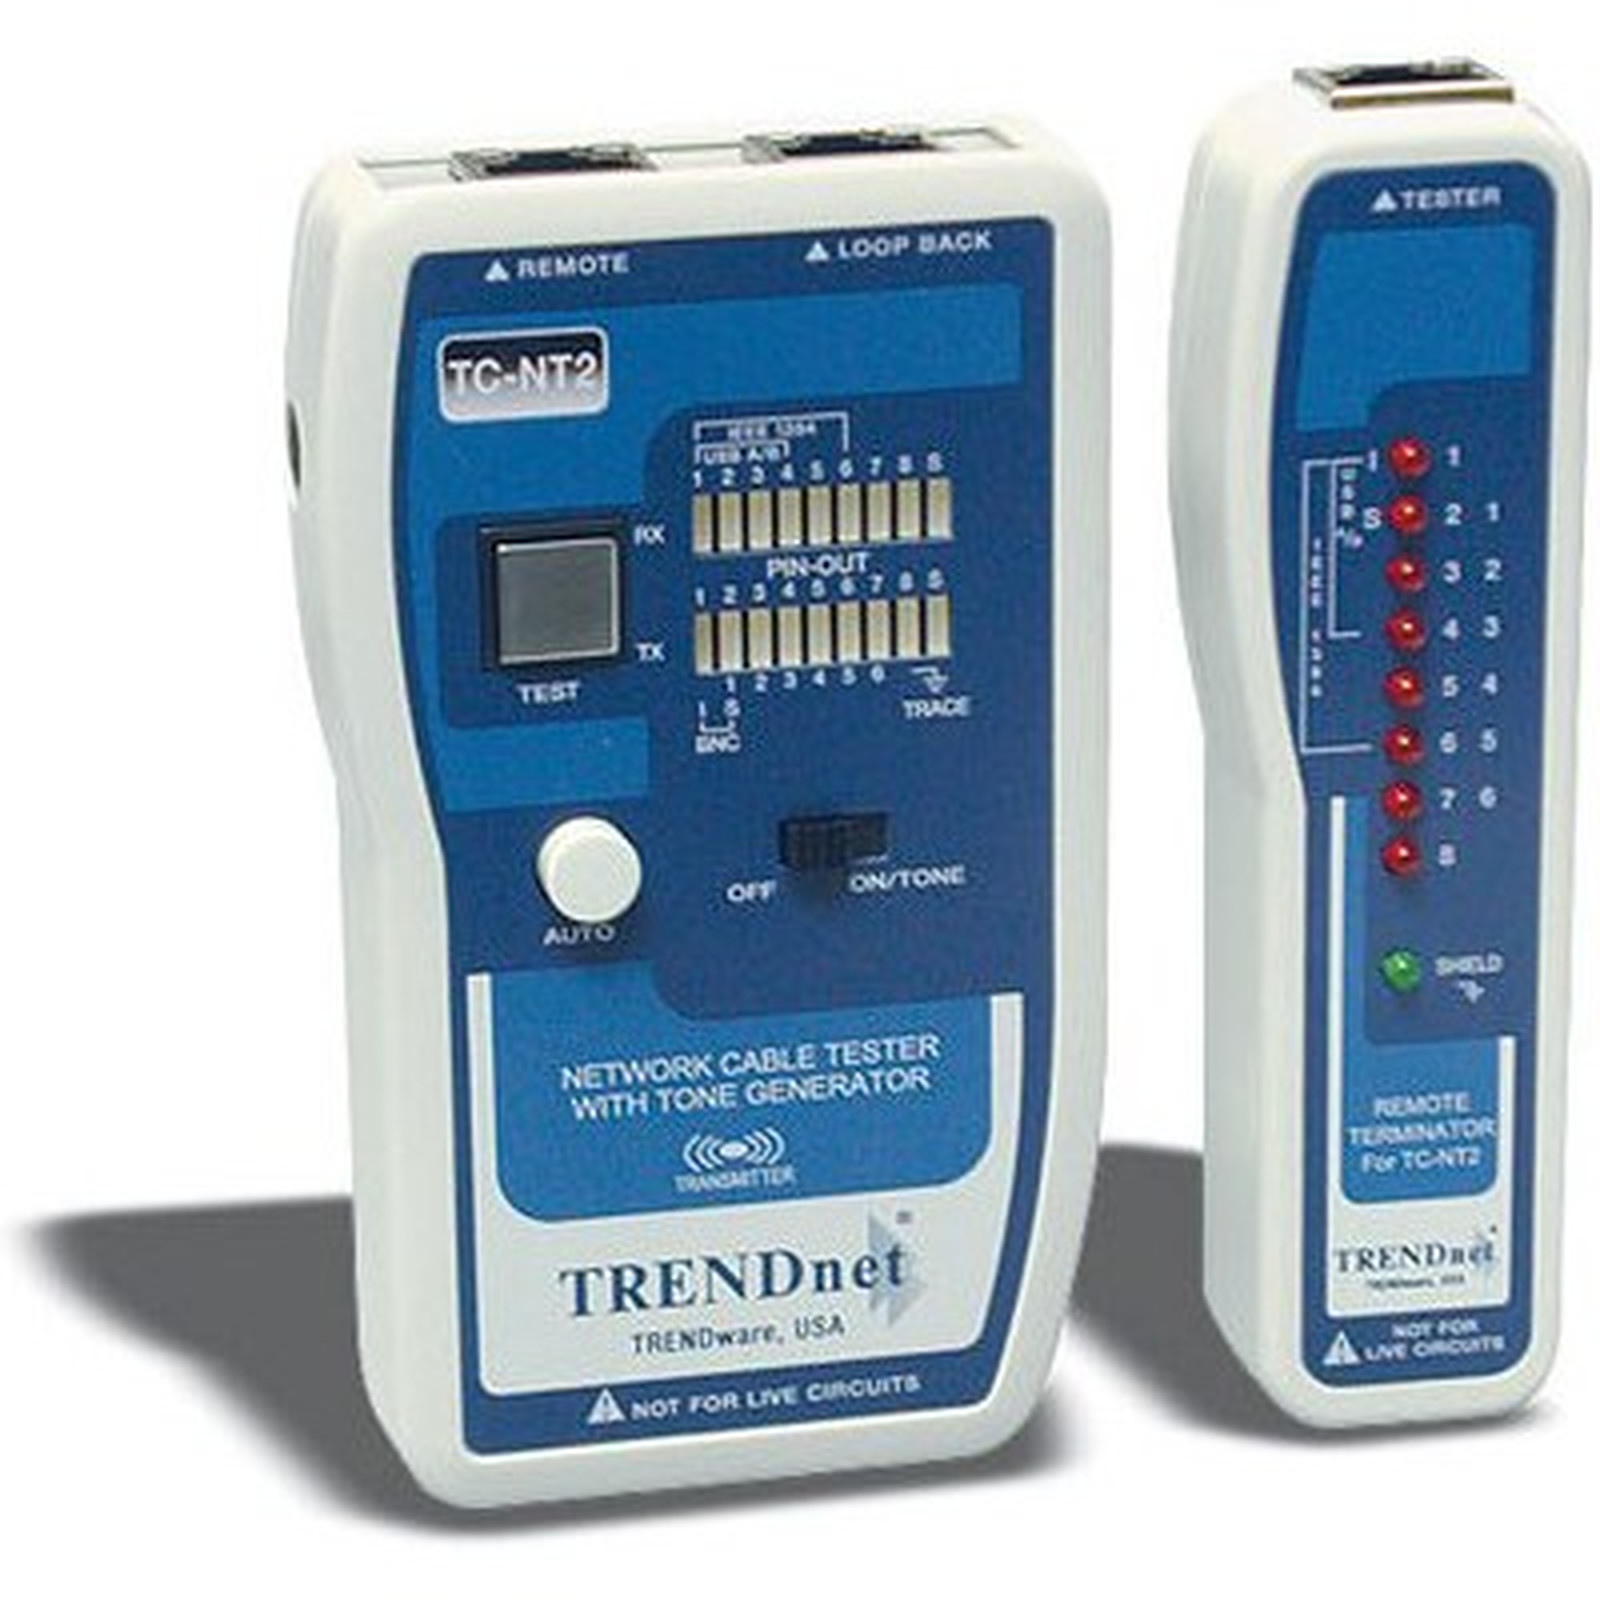 TRENDnet TC-NT2 - Appareil de mesure TRENDnet